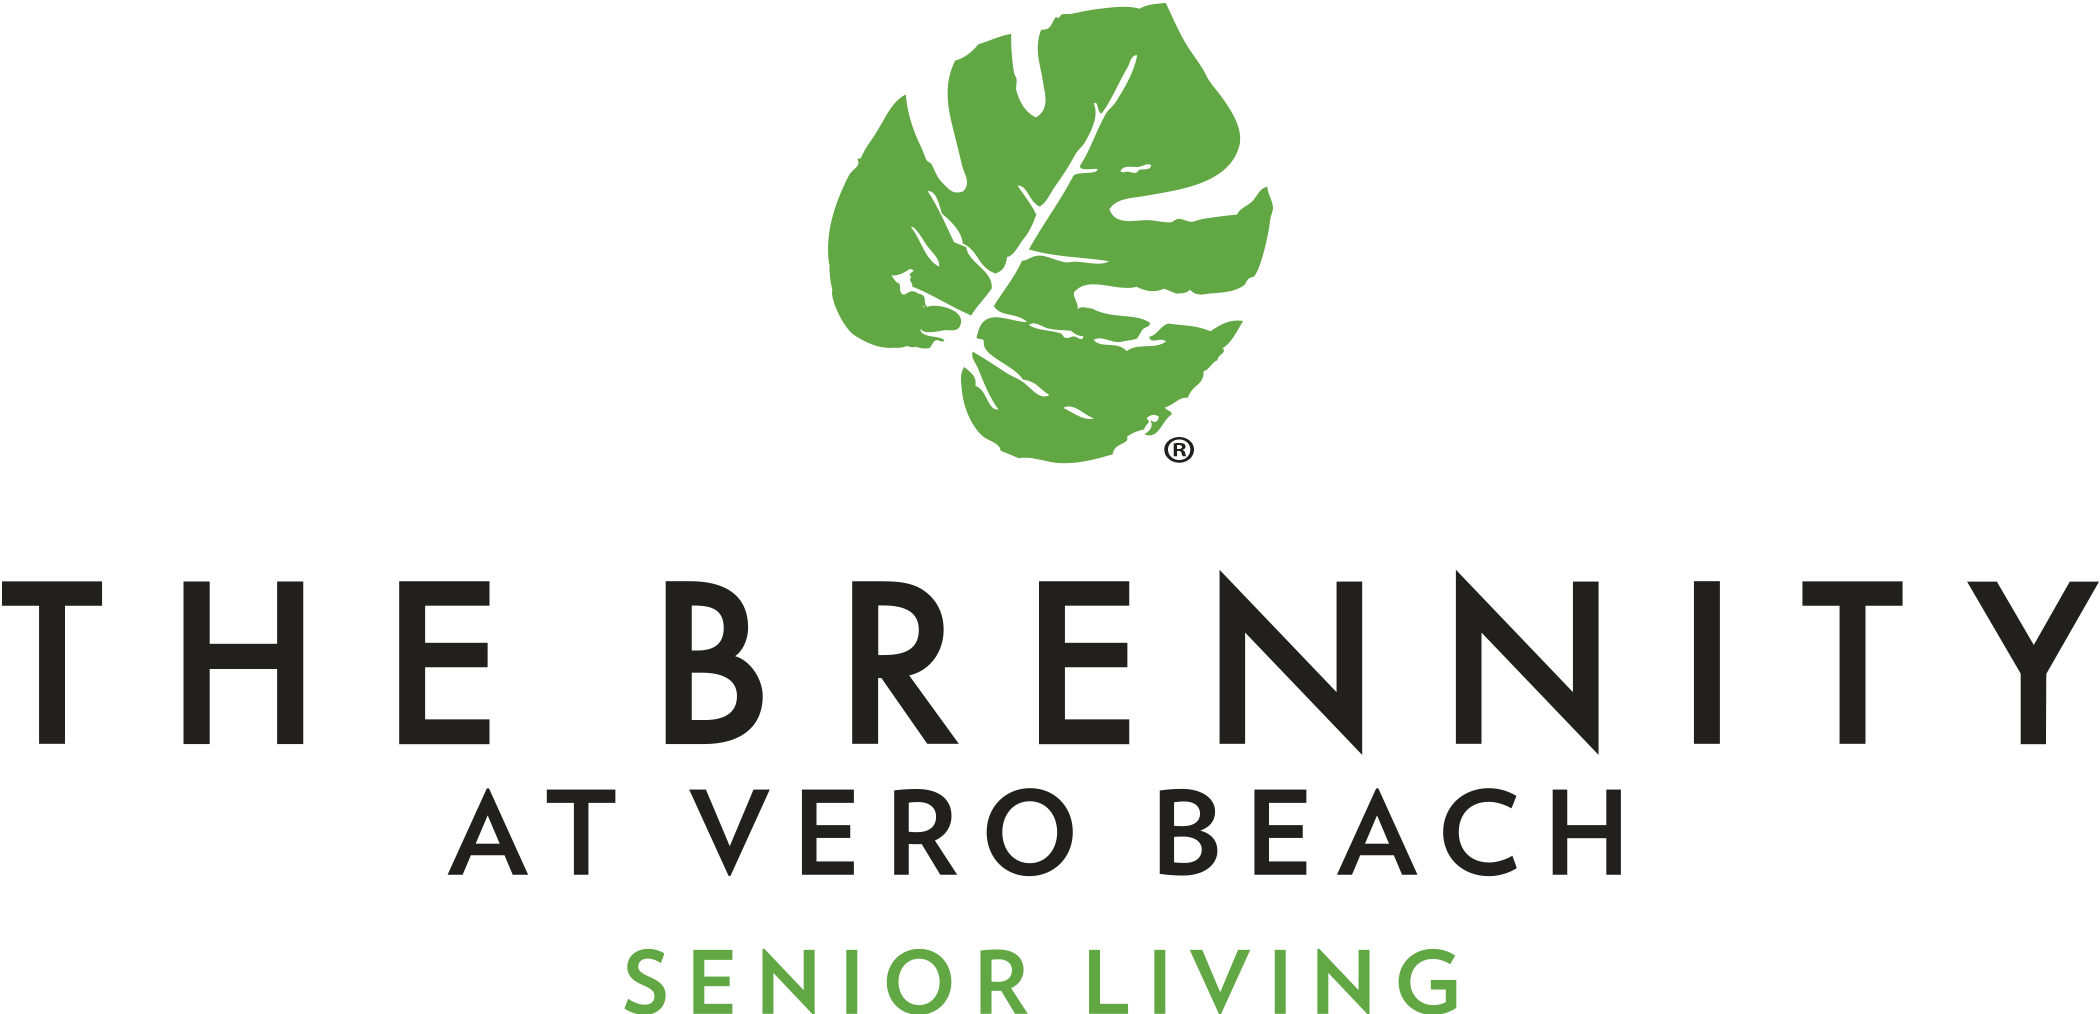 Brennity of Vero Beach